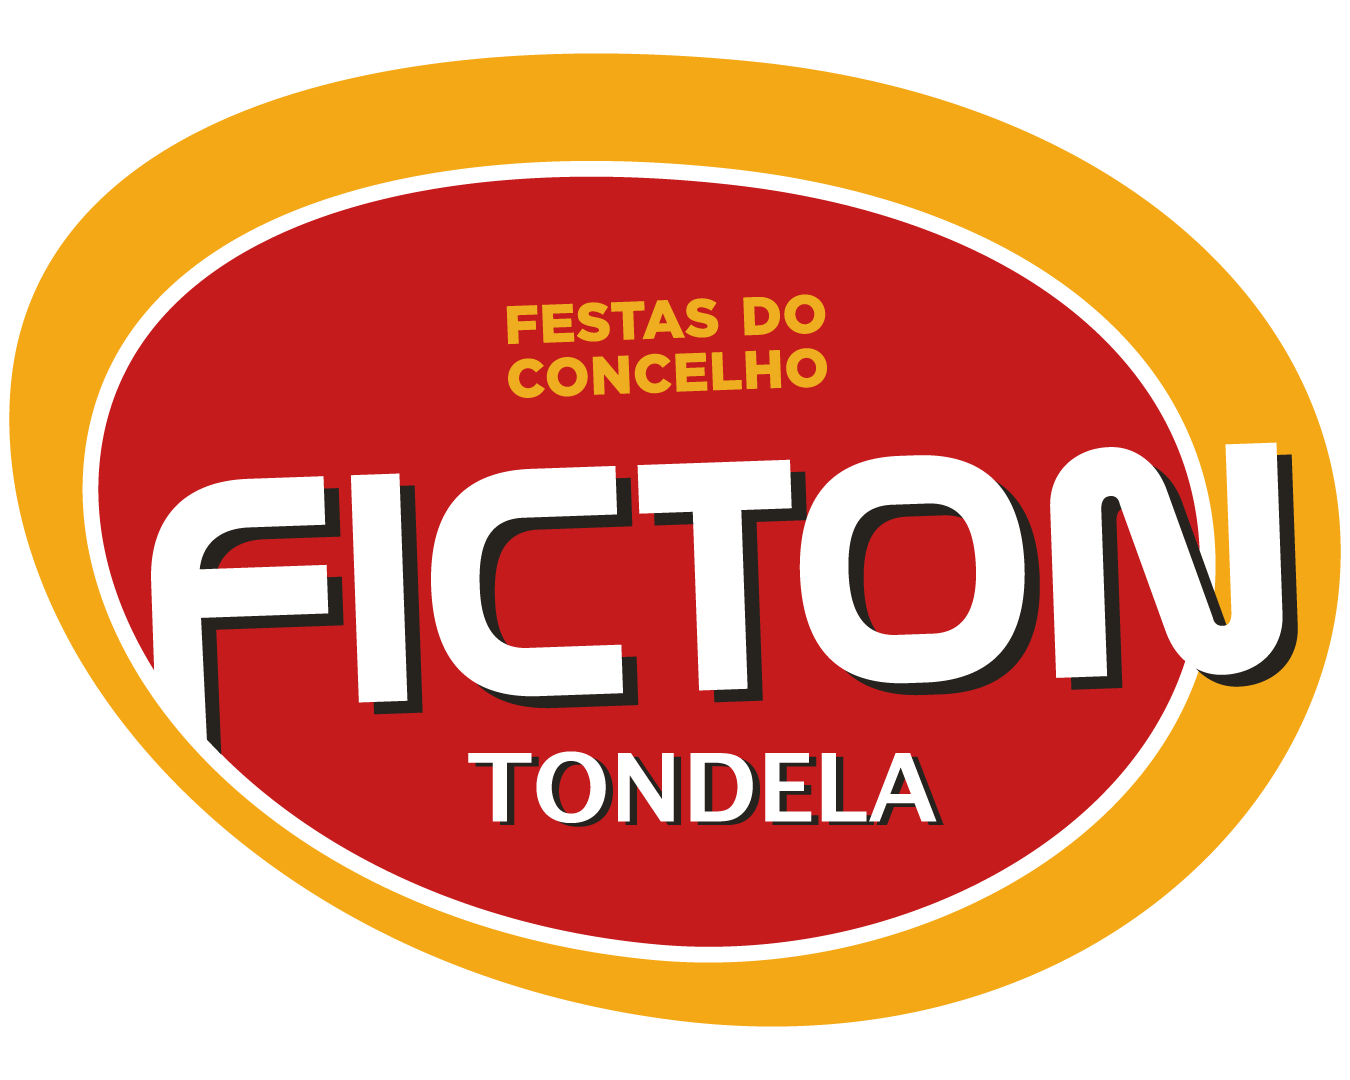 FICTON – Feira Industrial e Comercial do Concelho de Tondela